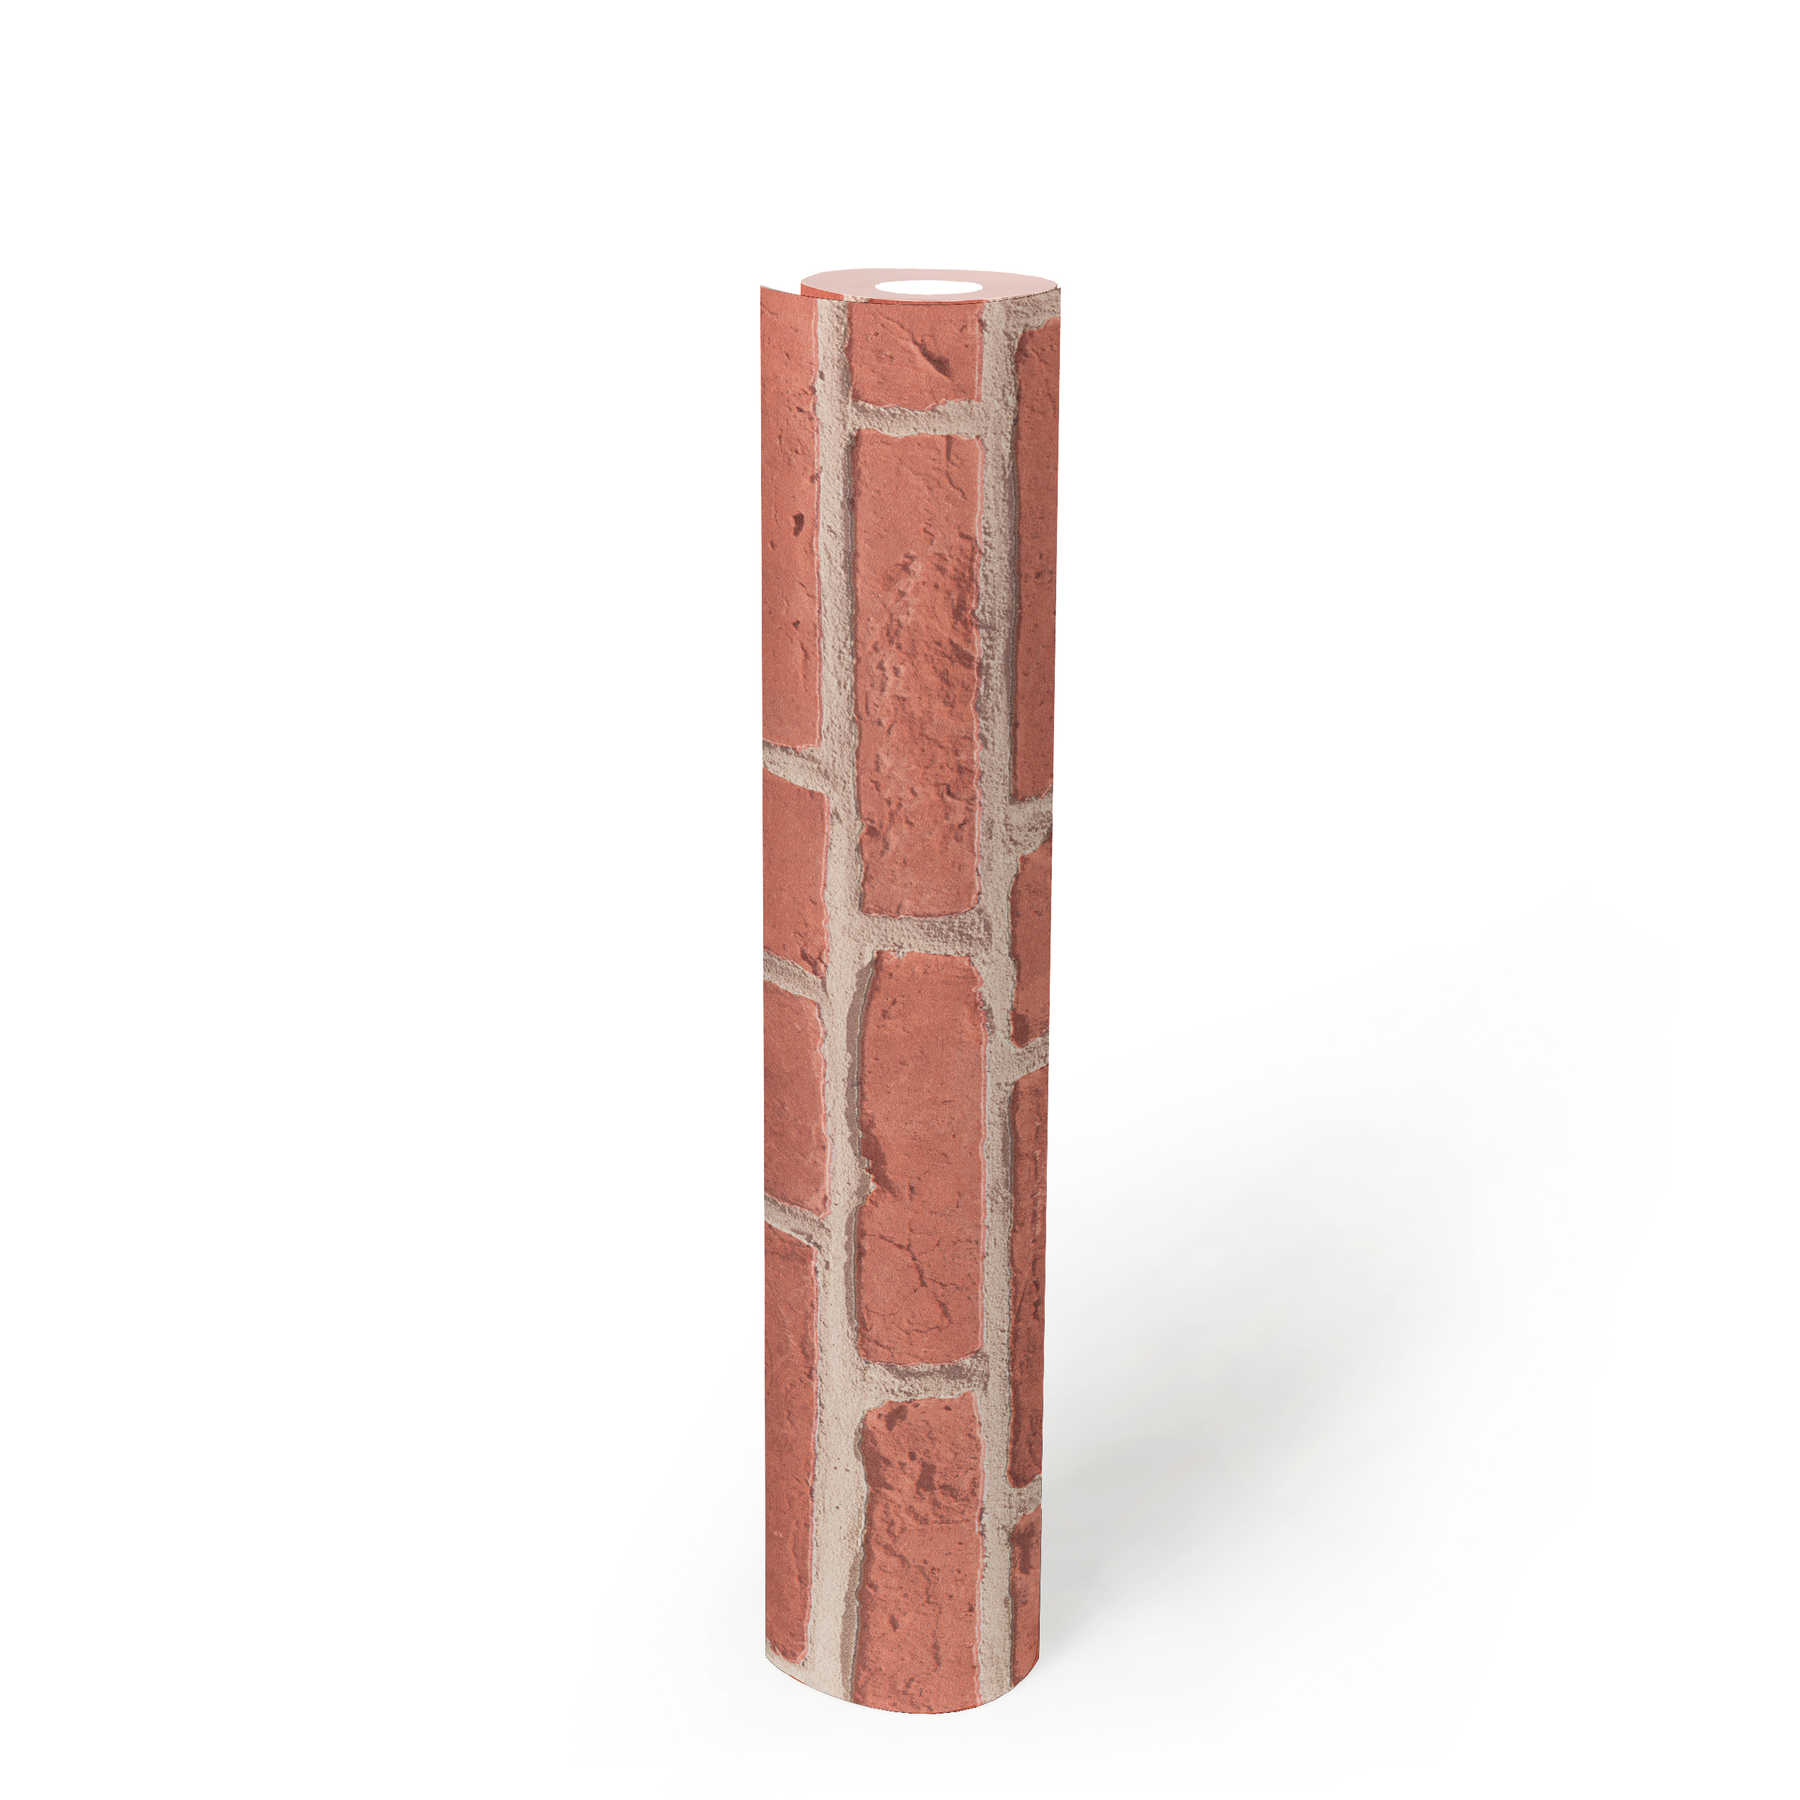             Wallpaper with bricks in clinker look - red, beige
        